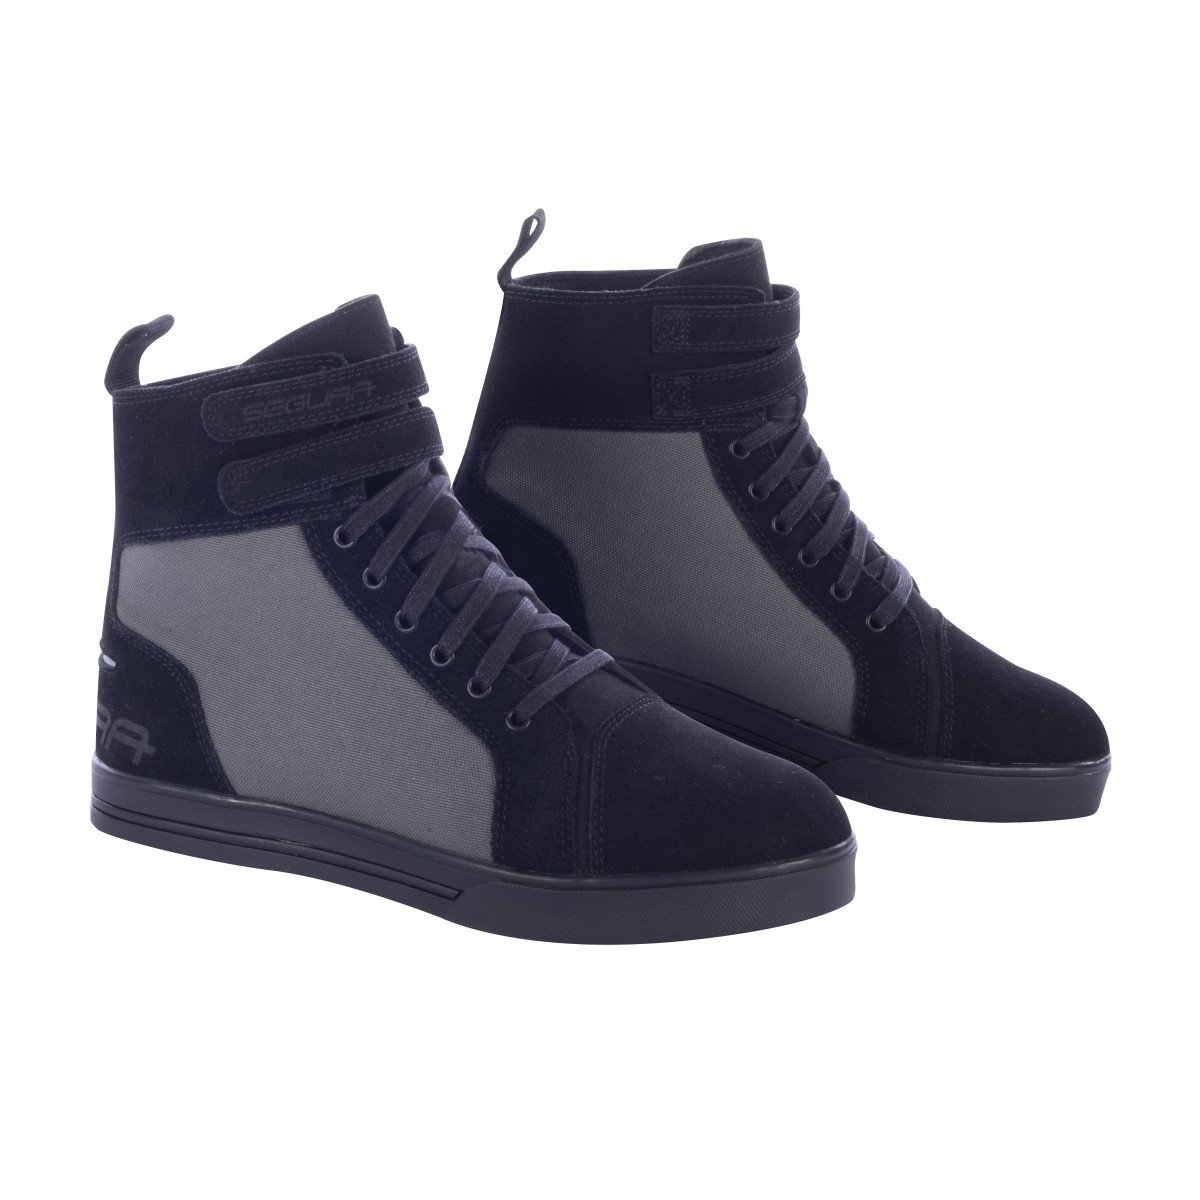 Image of Segura Sneakers Contact Black Grey Size 41 ID 3660815171547